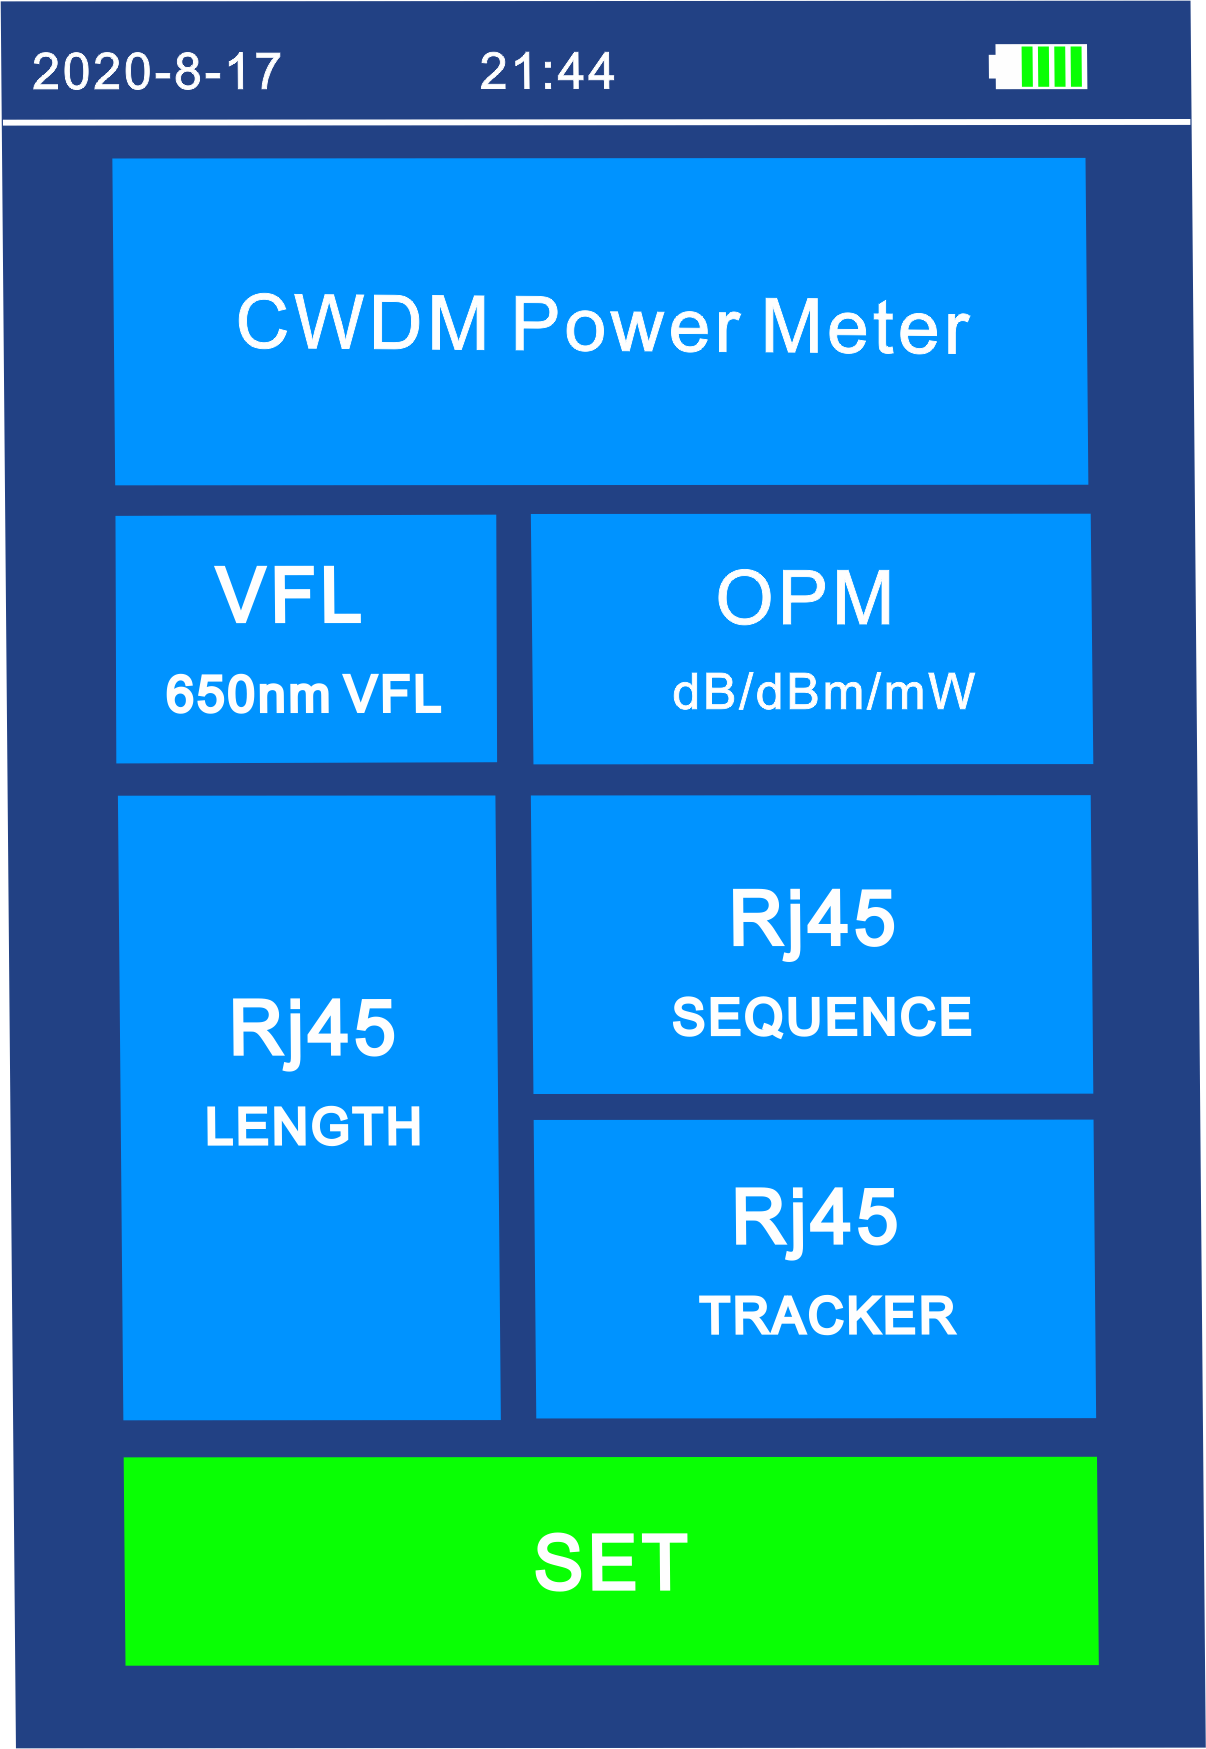 FF-3225 CWDM power meter